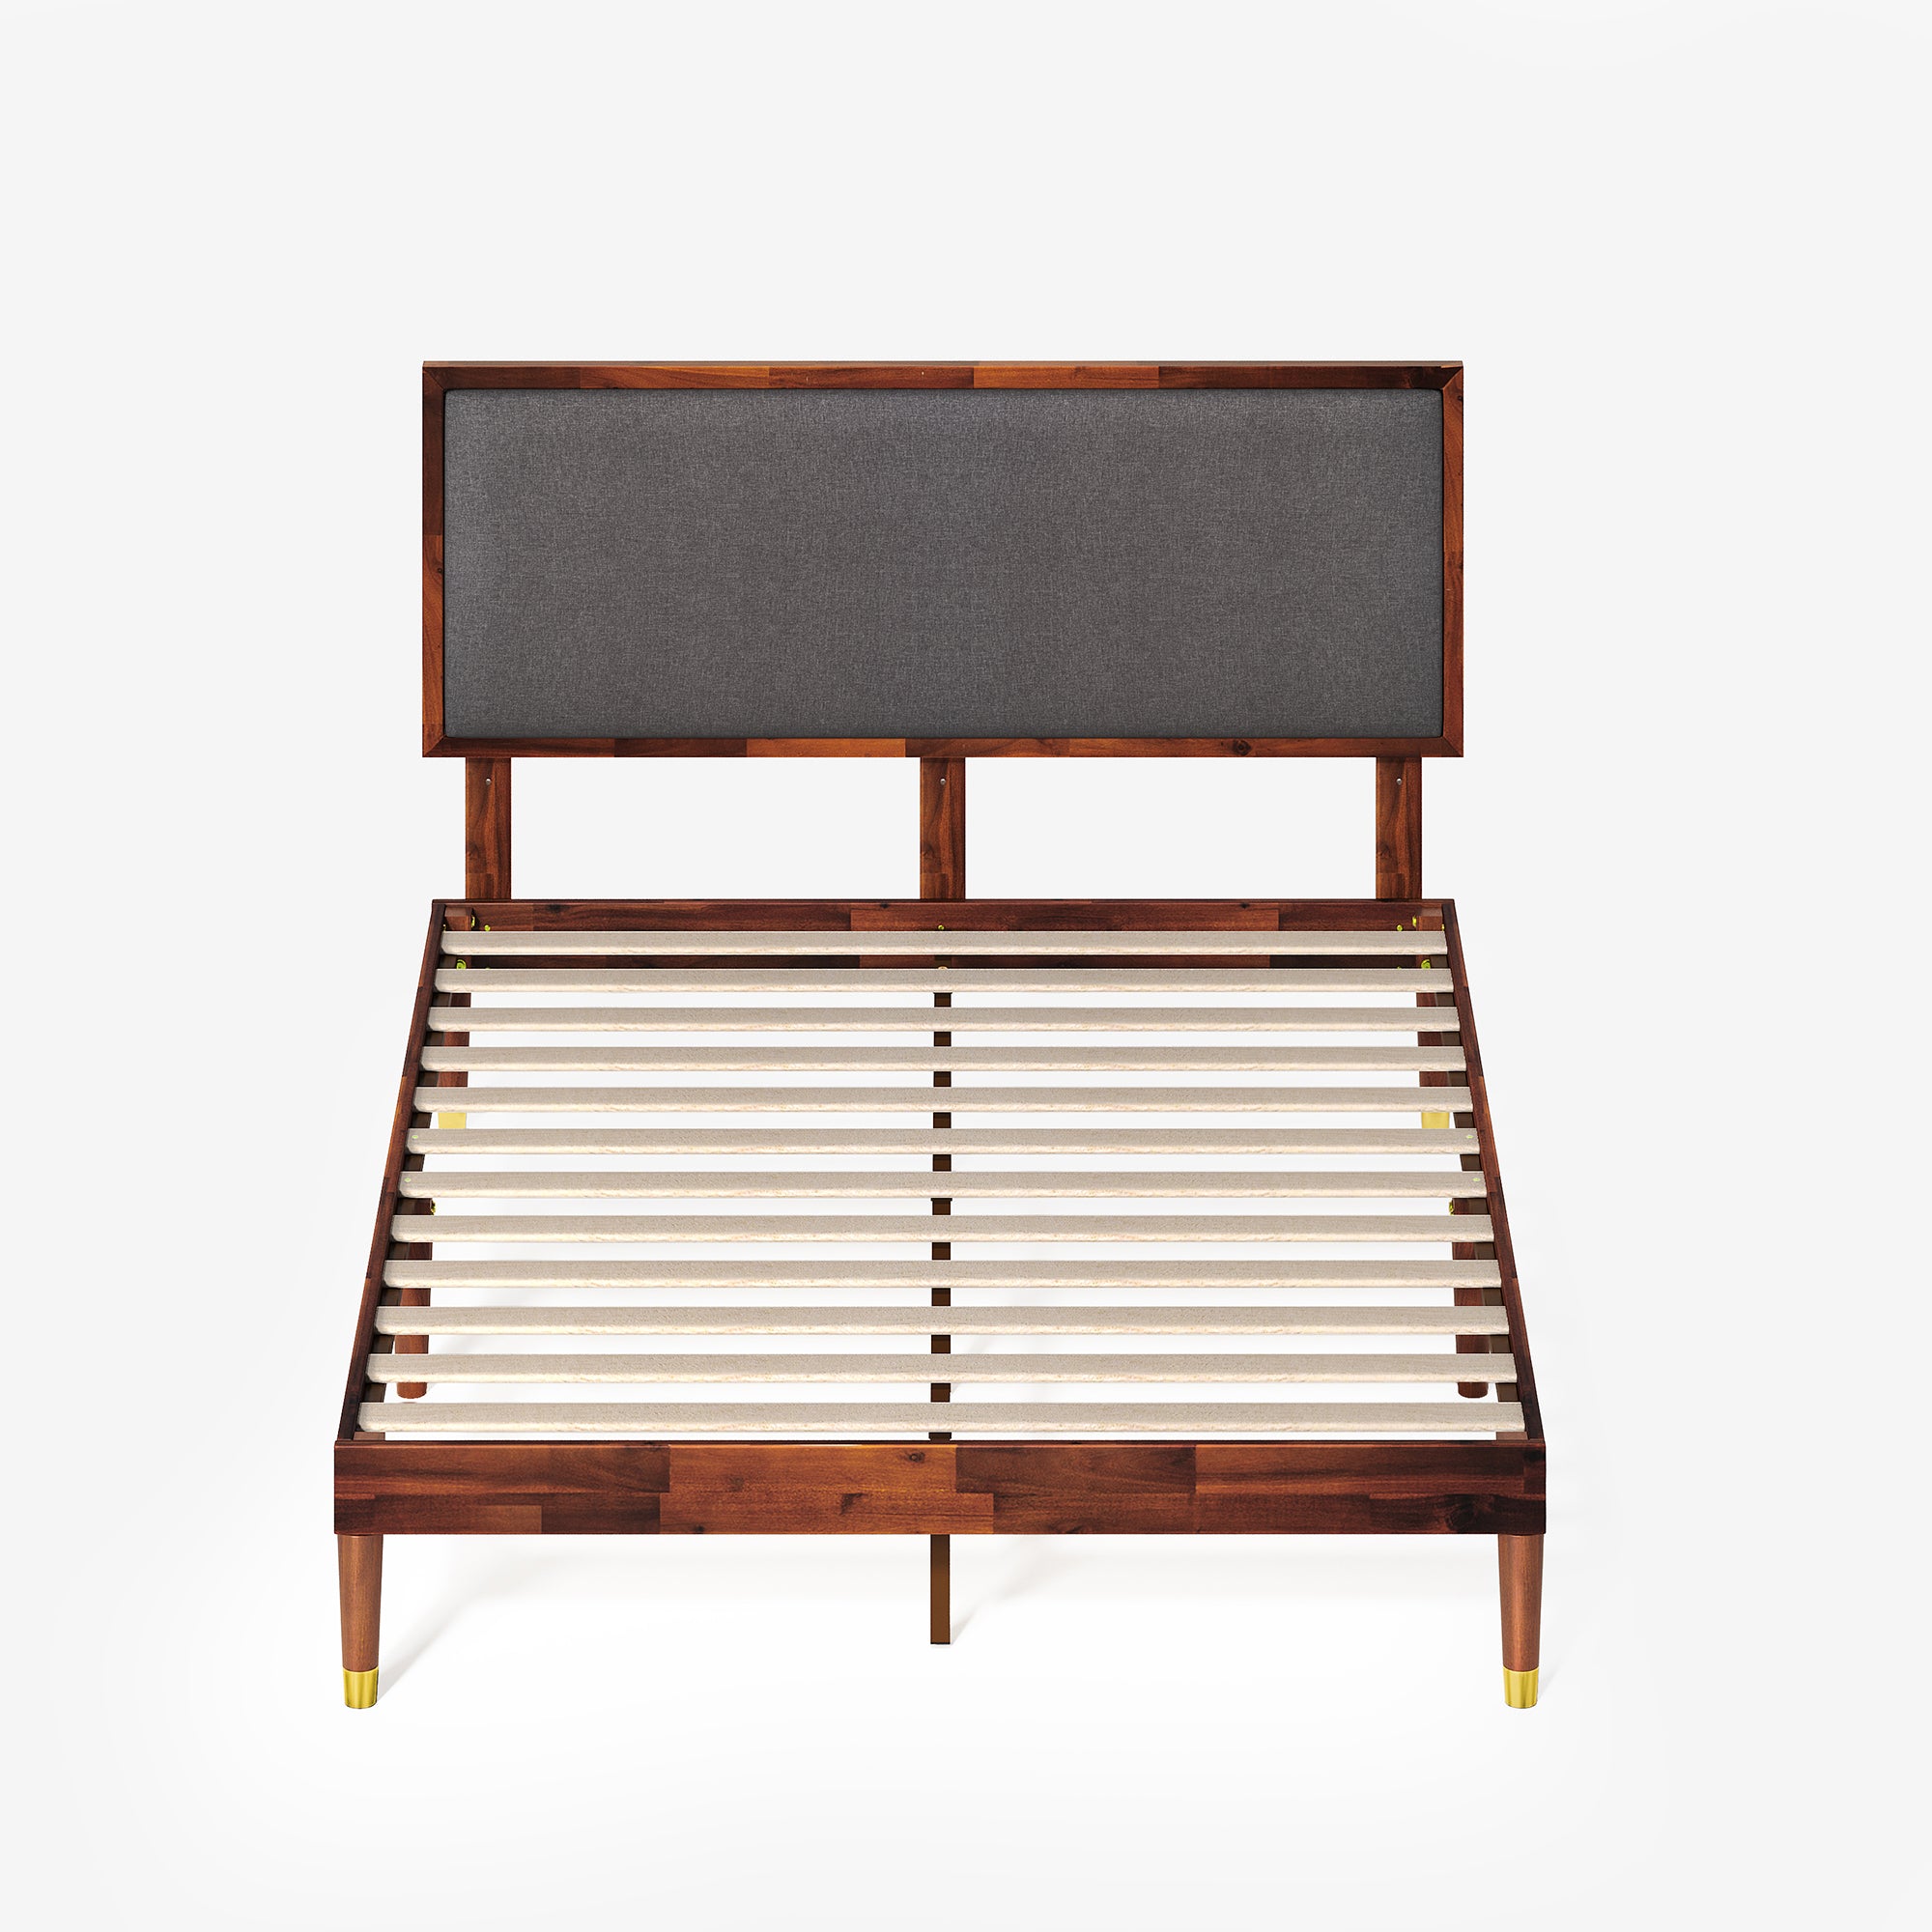 Raymond Wood Platform Bed Frame with Upholstered Headboard